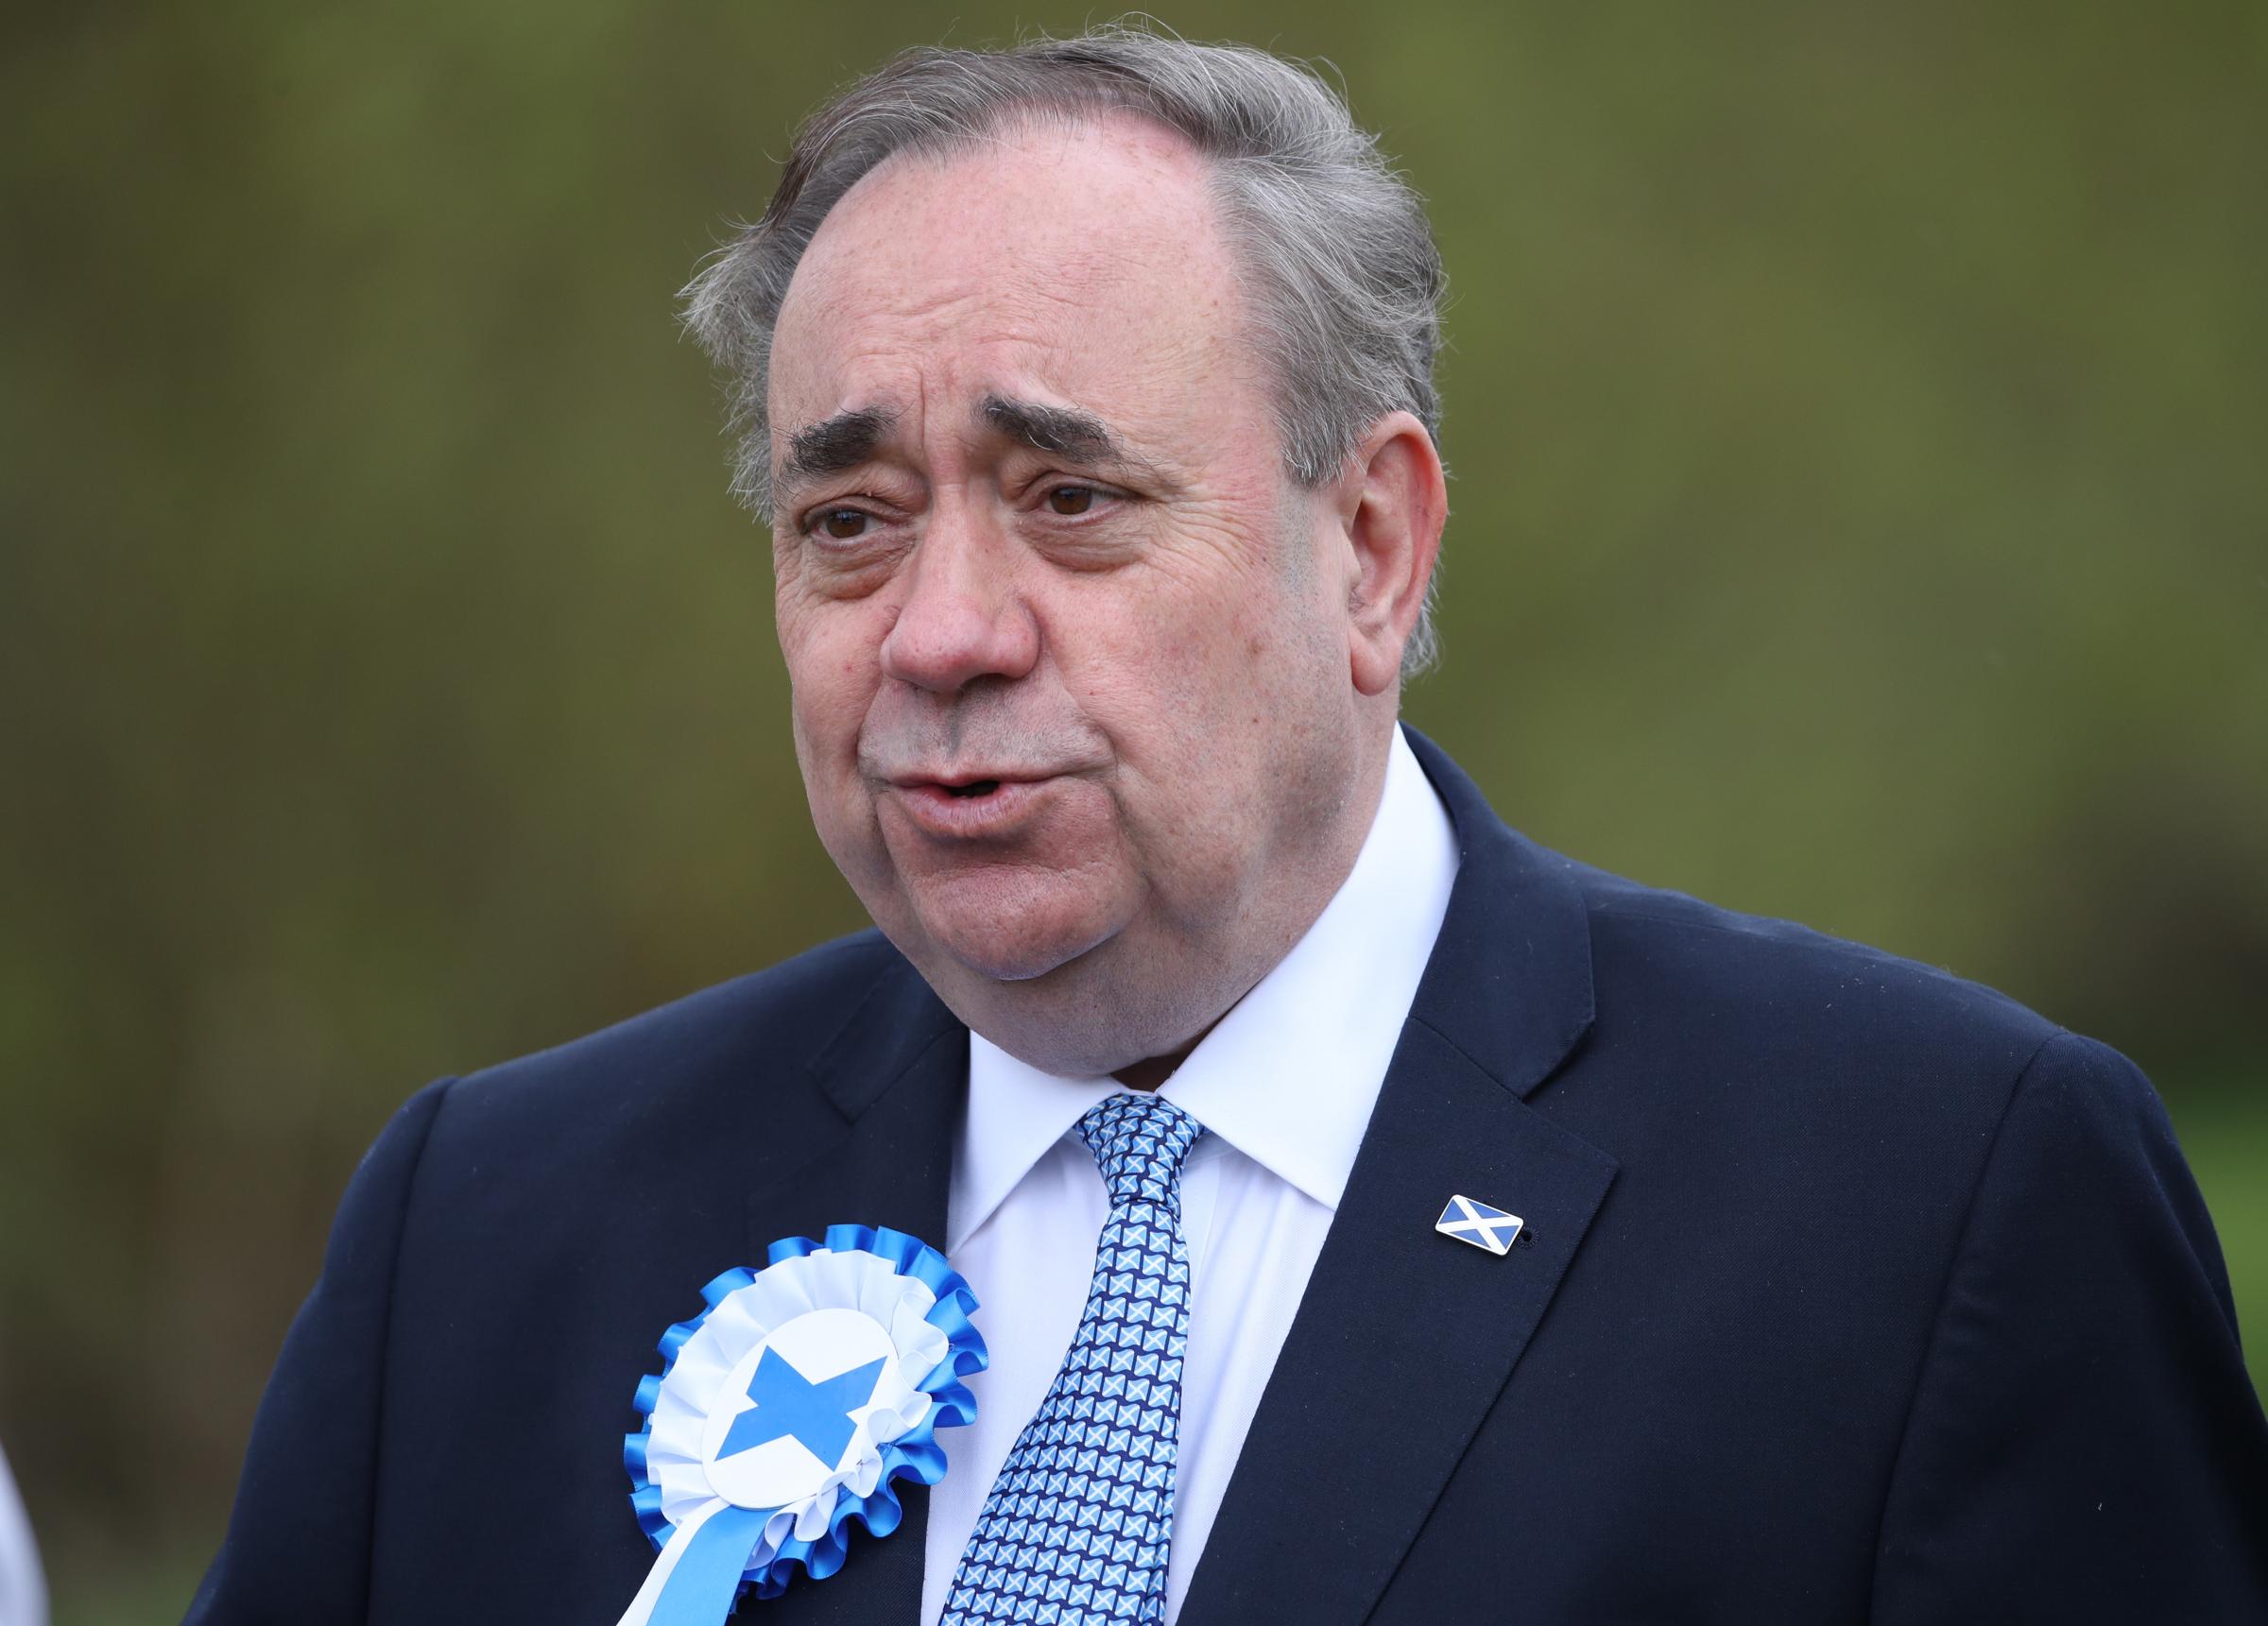 Alba will 'bloom' after Scottish election, Alex Salmond says